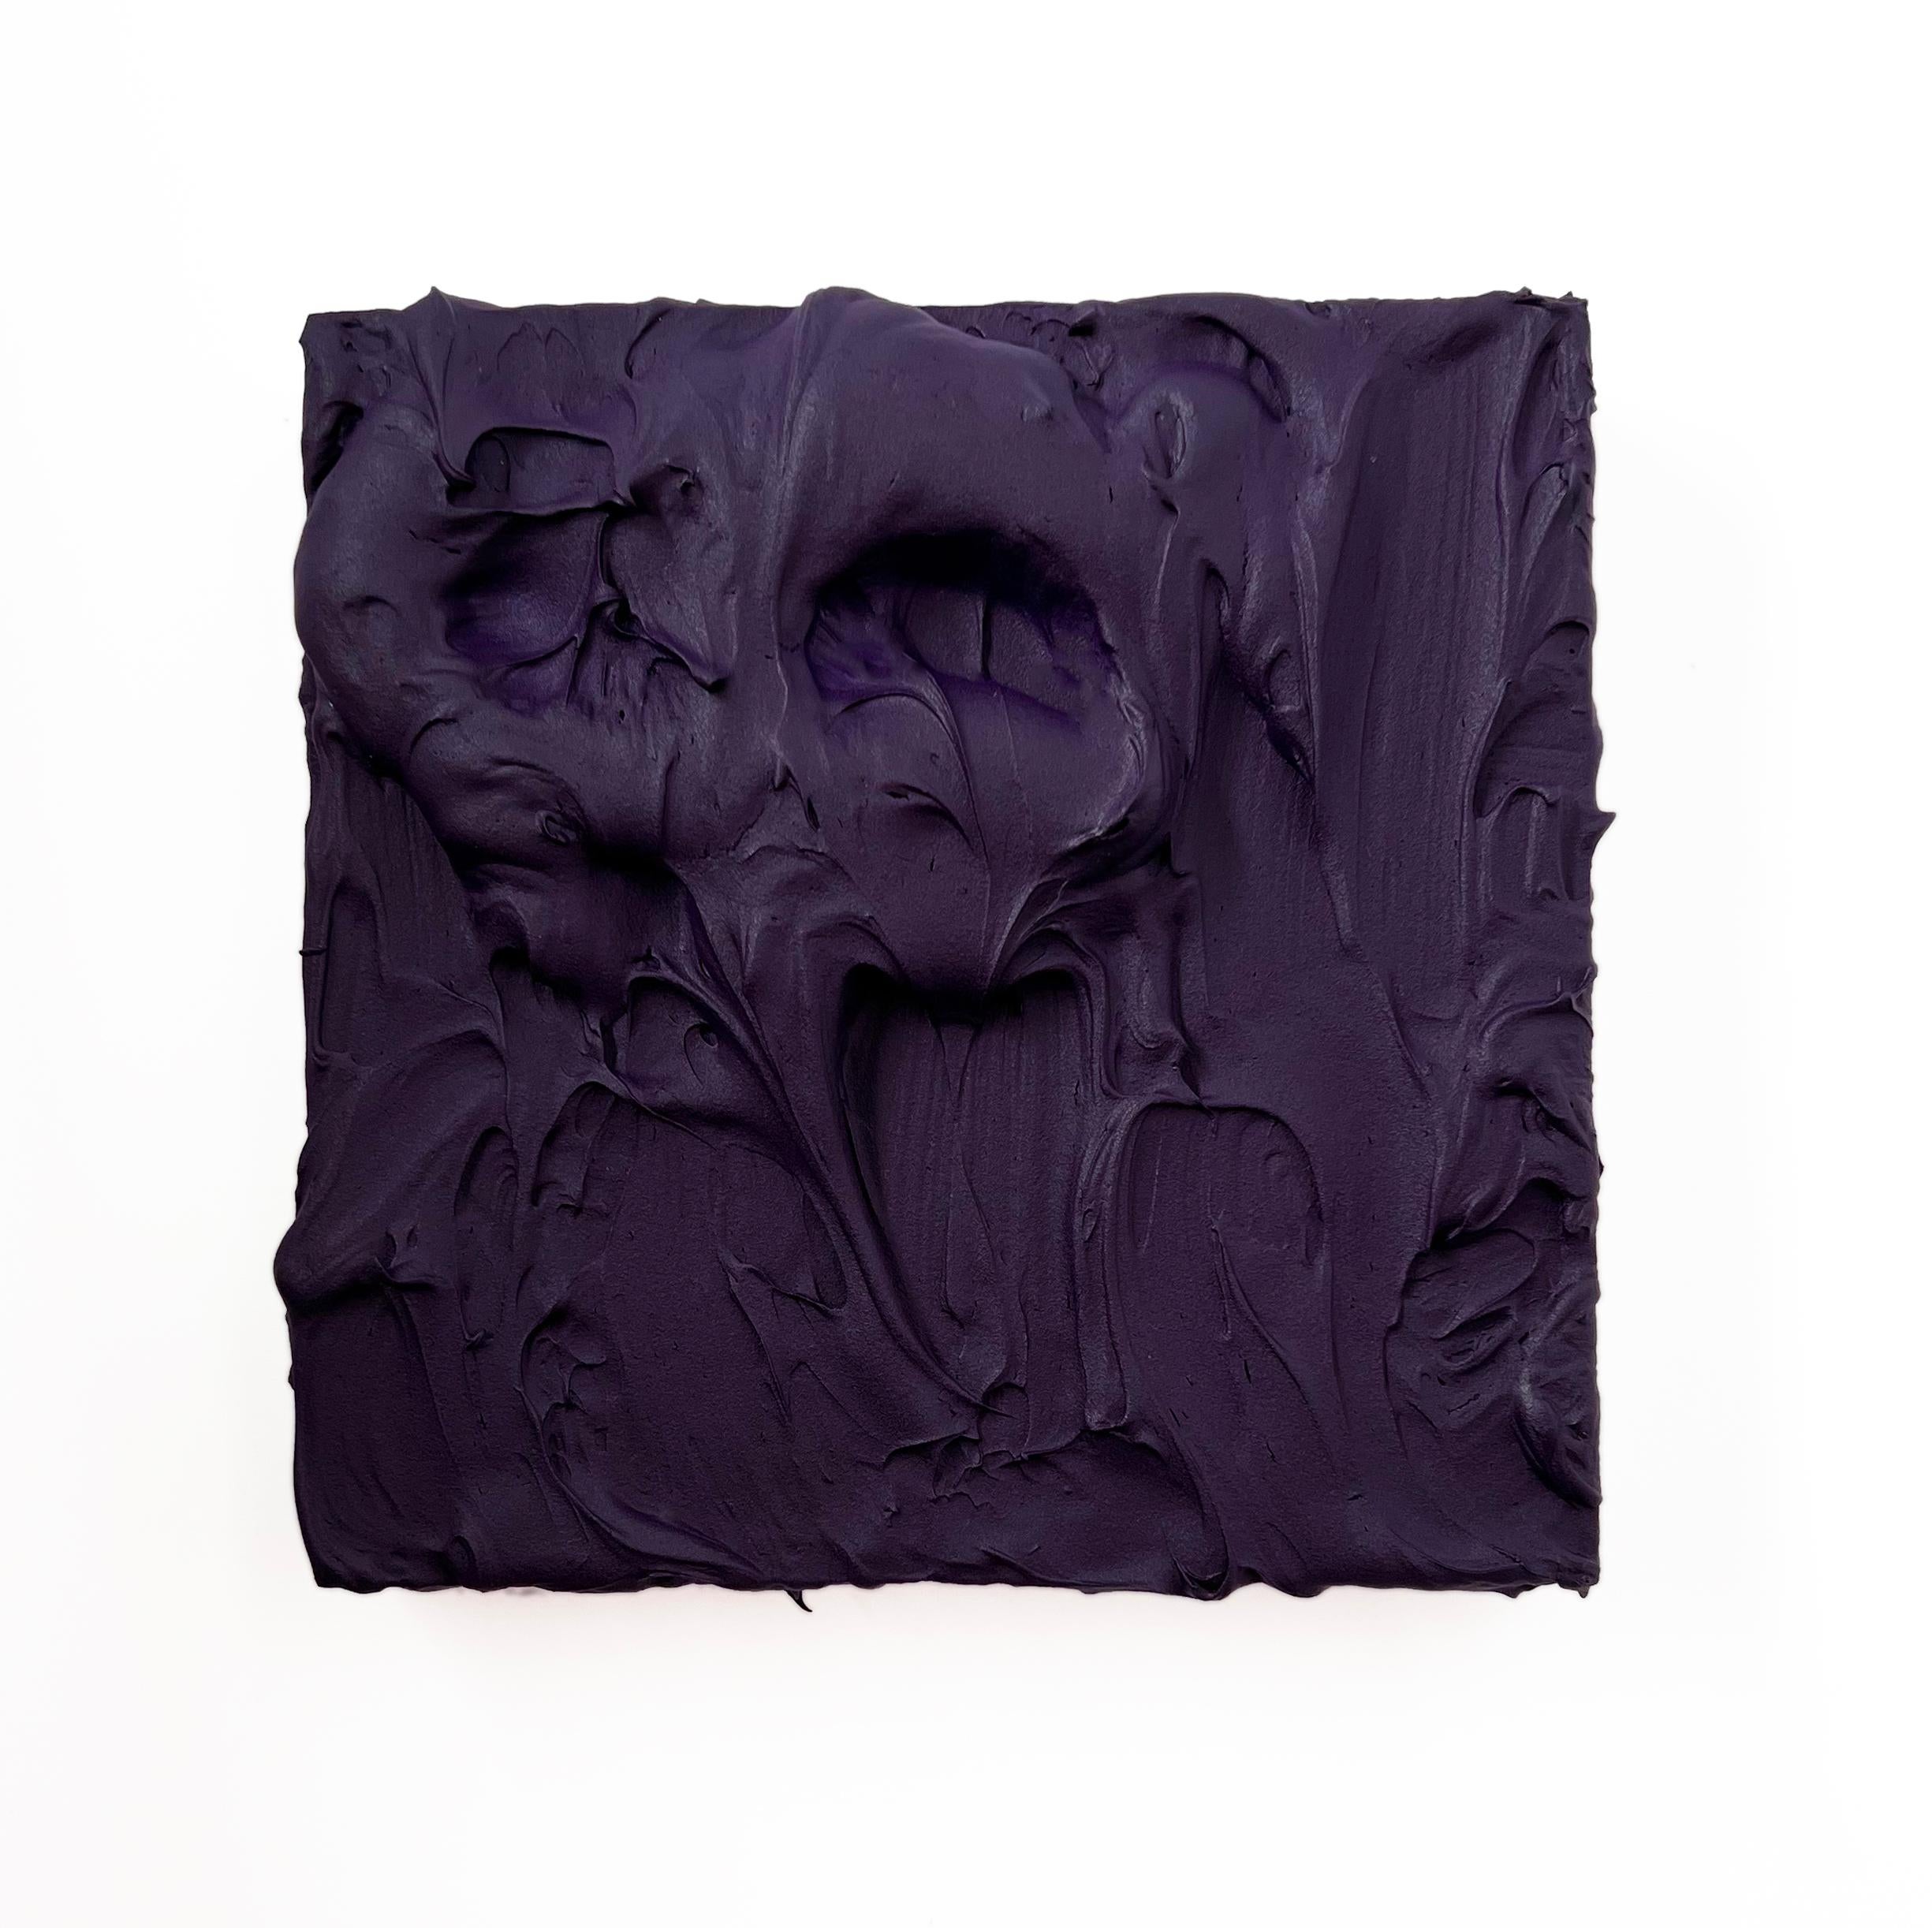 Royal Purple Excess (thick impasto painting monochrome pop art square design)